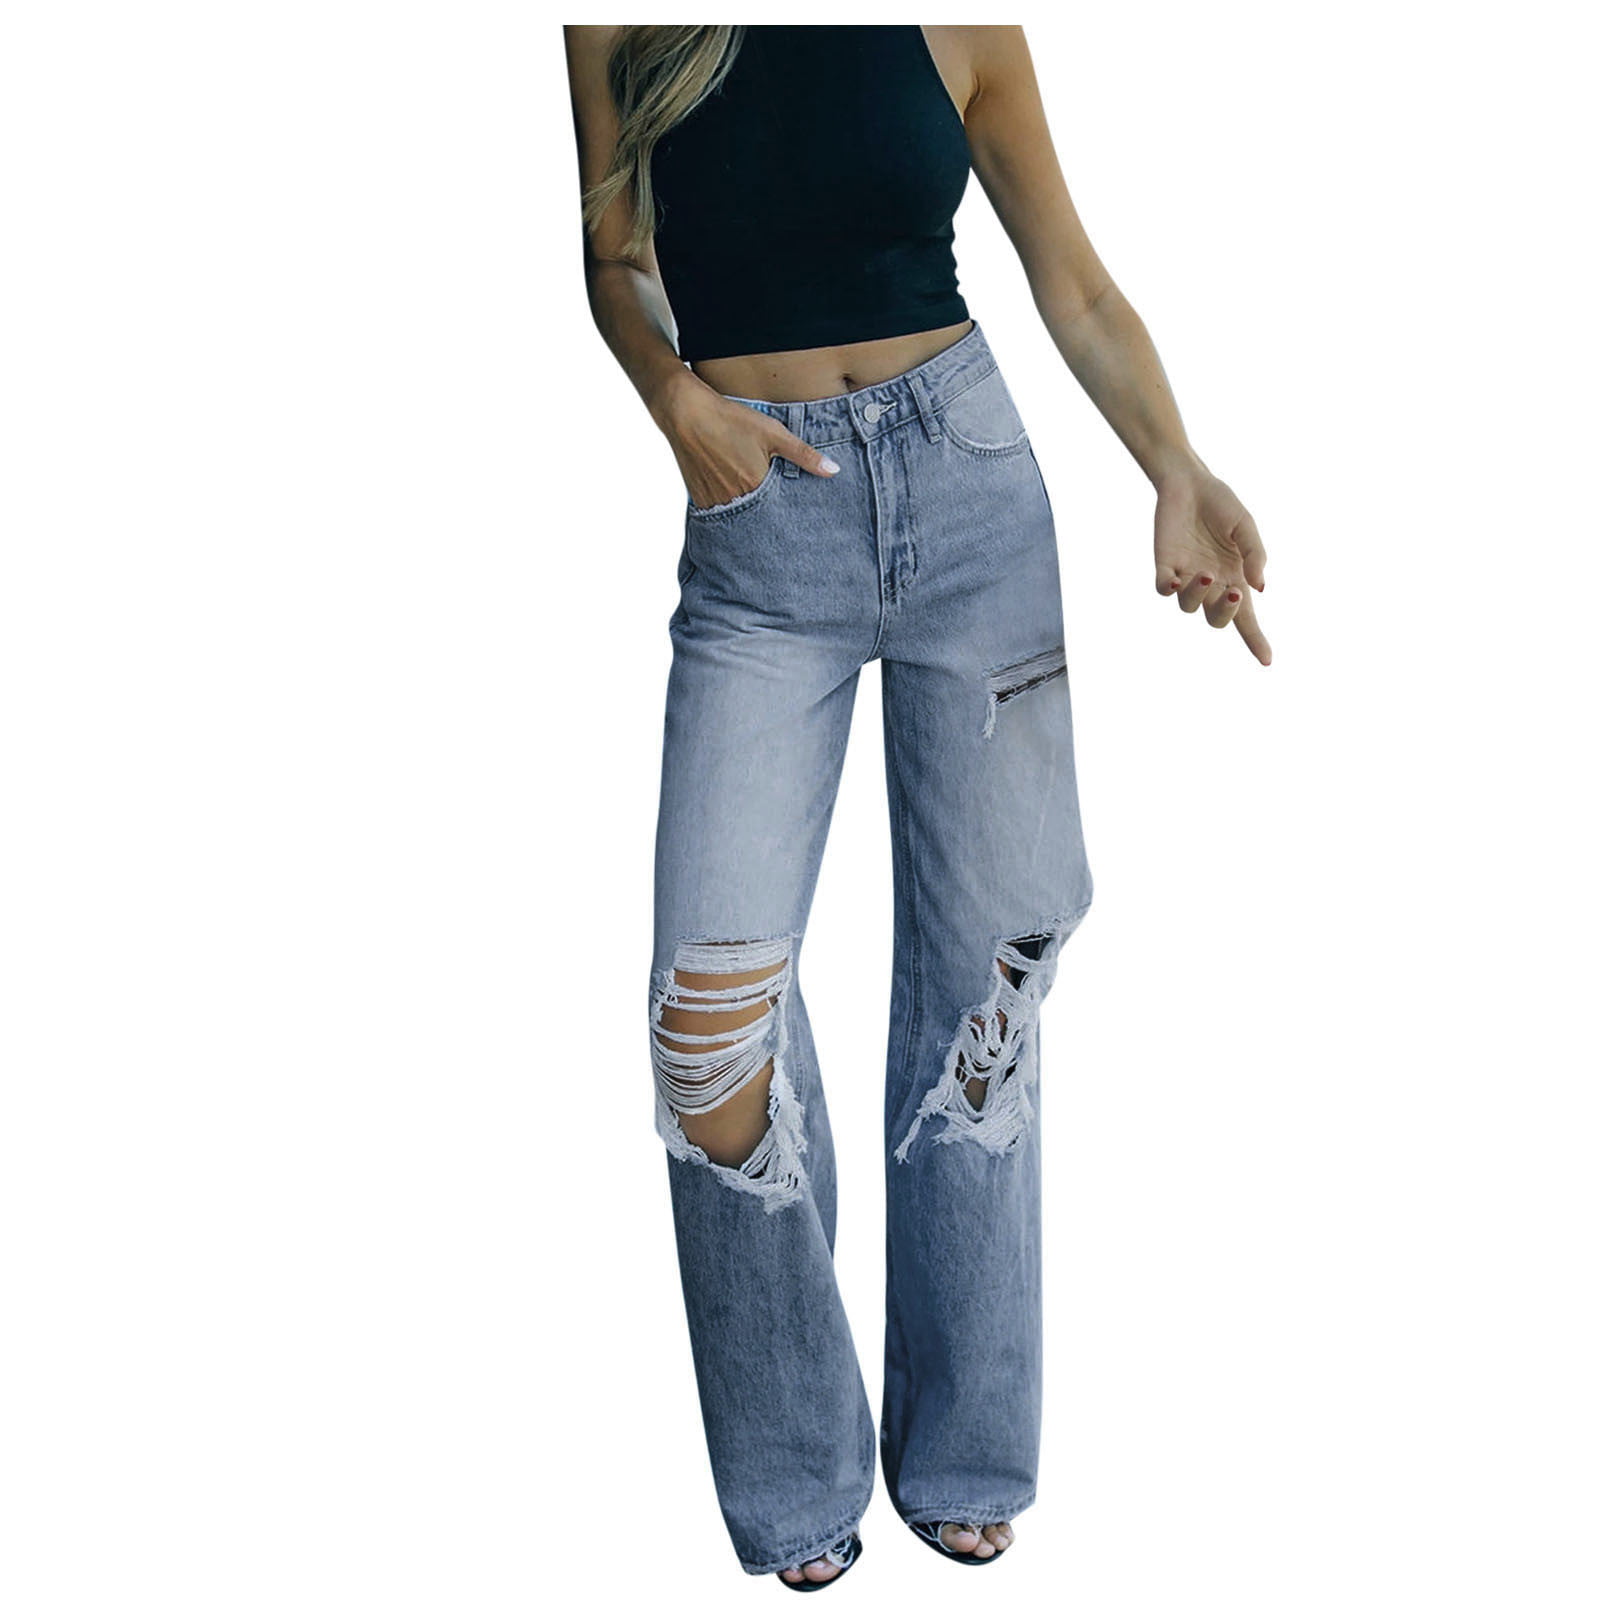 Women Button High Waist Pocket Elastic Hole Jeans Trousers Slim Denim  Pantswomen's slim bootcut jeans women's low jeans women's jeans size 12  women's